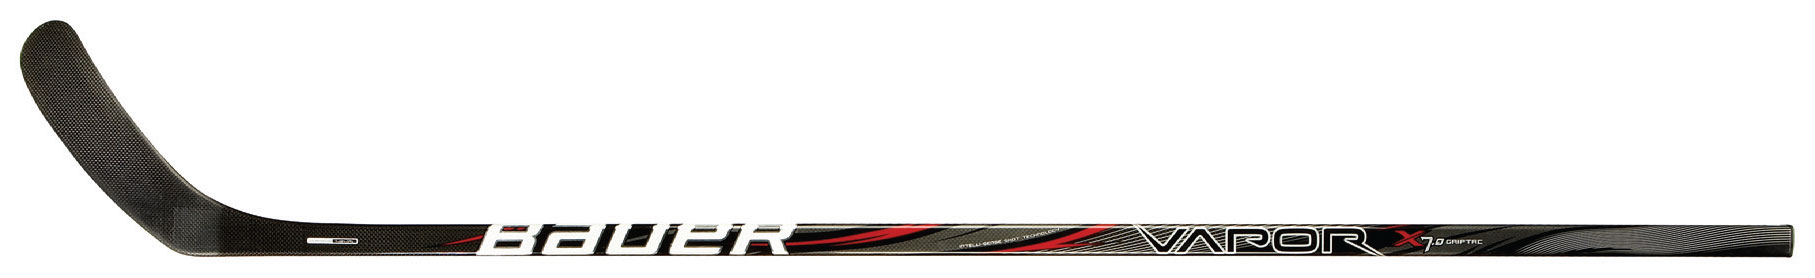 Bauer Vapor X7.0 Hockey Stick